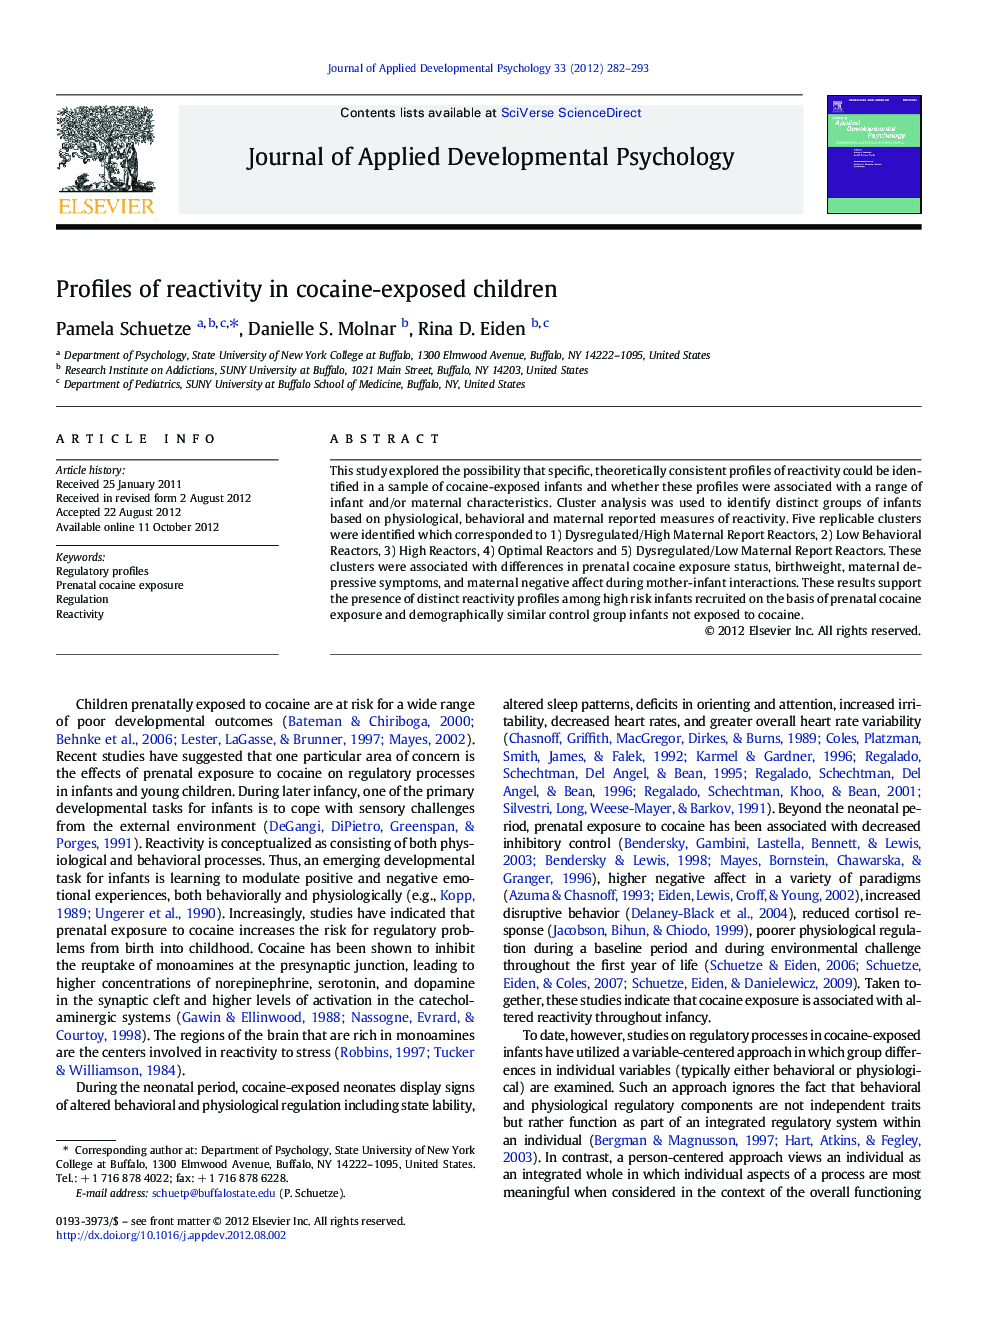 Profiles of reactivity in cocaine-exposed children